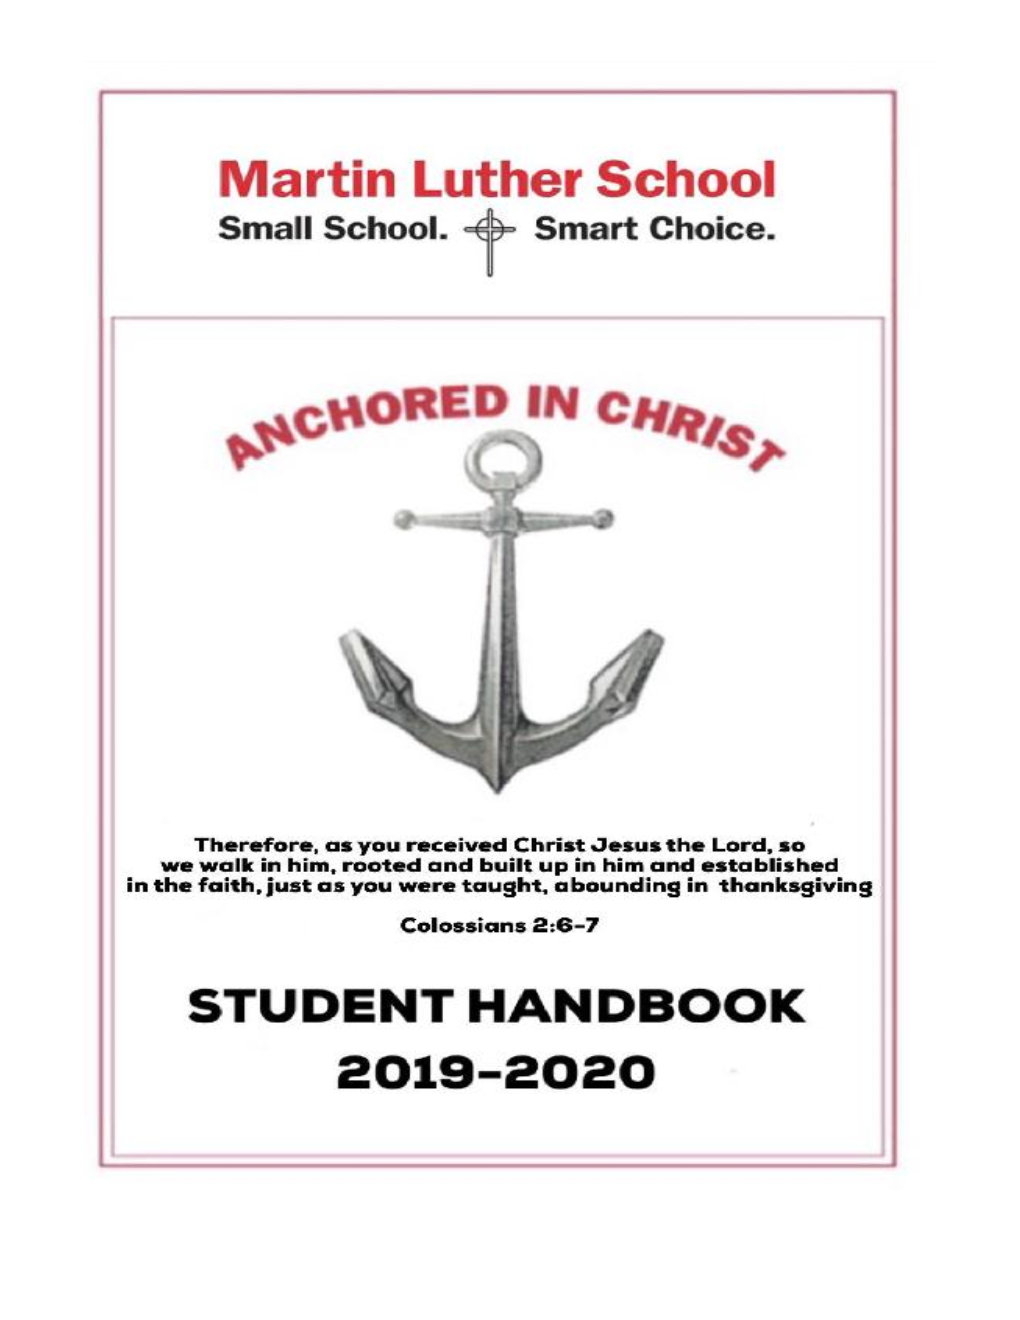 MLS 2019-2020 Student Handbook 8.27.Pdf